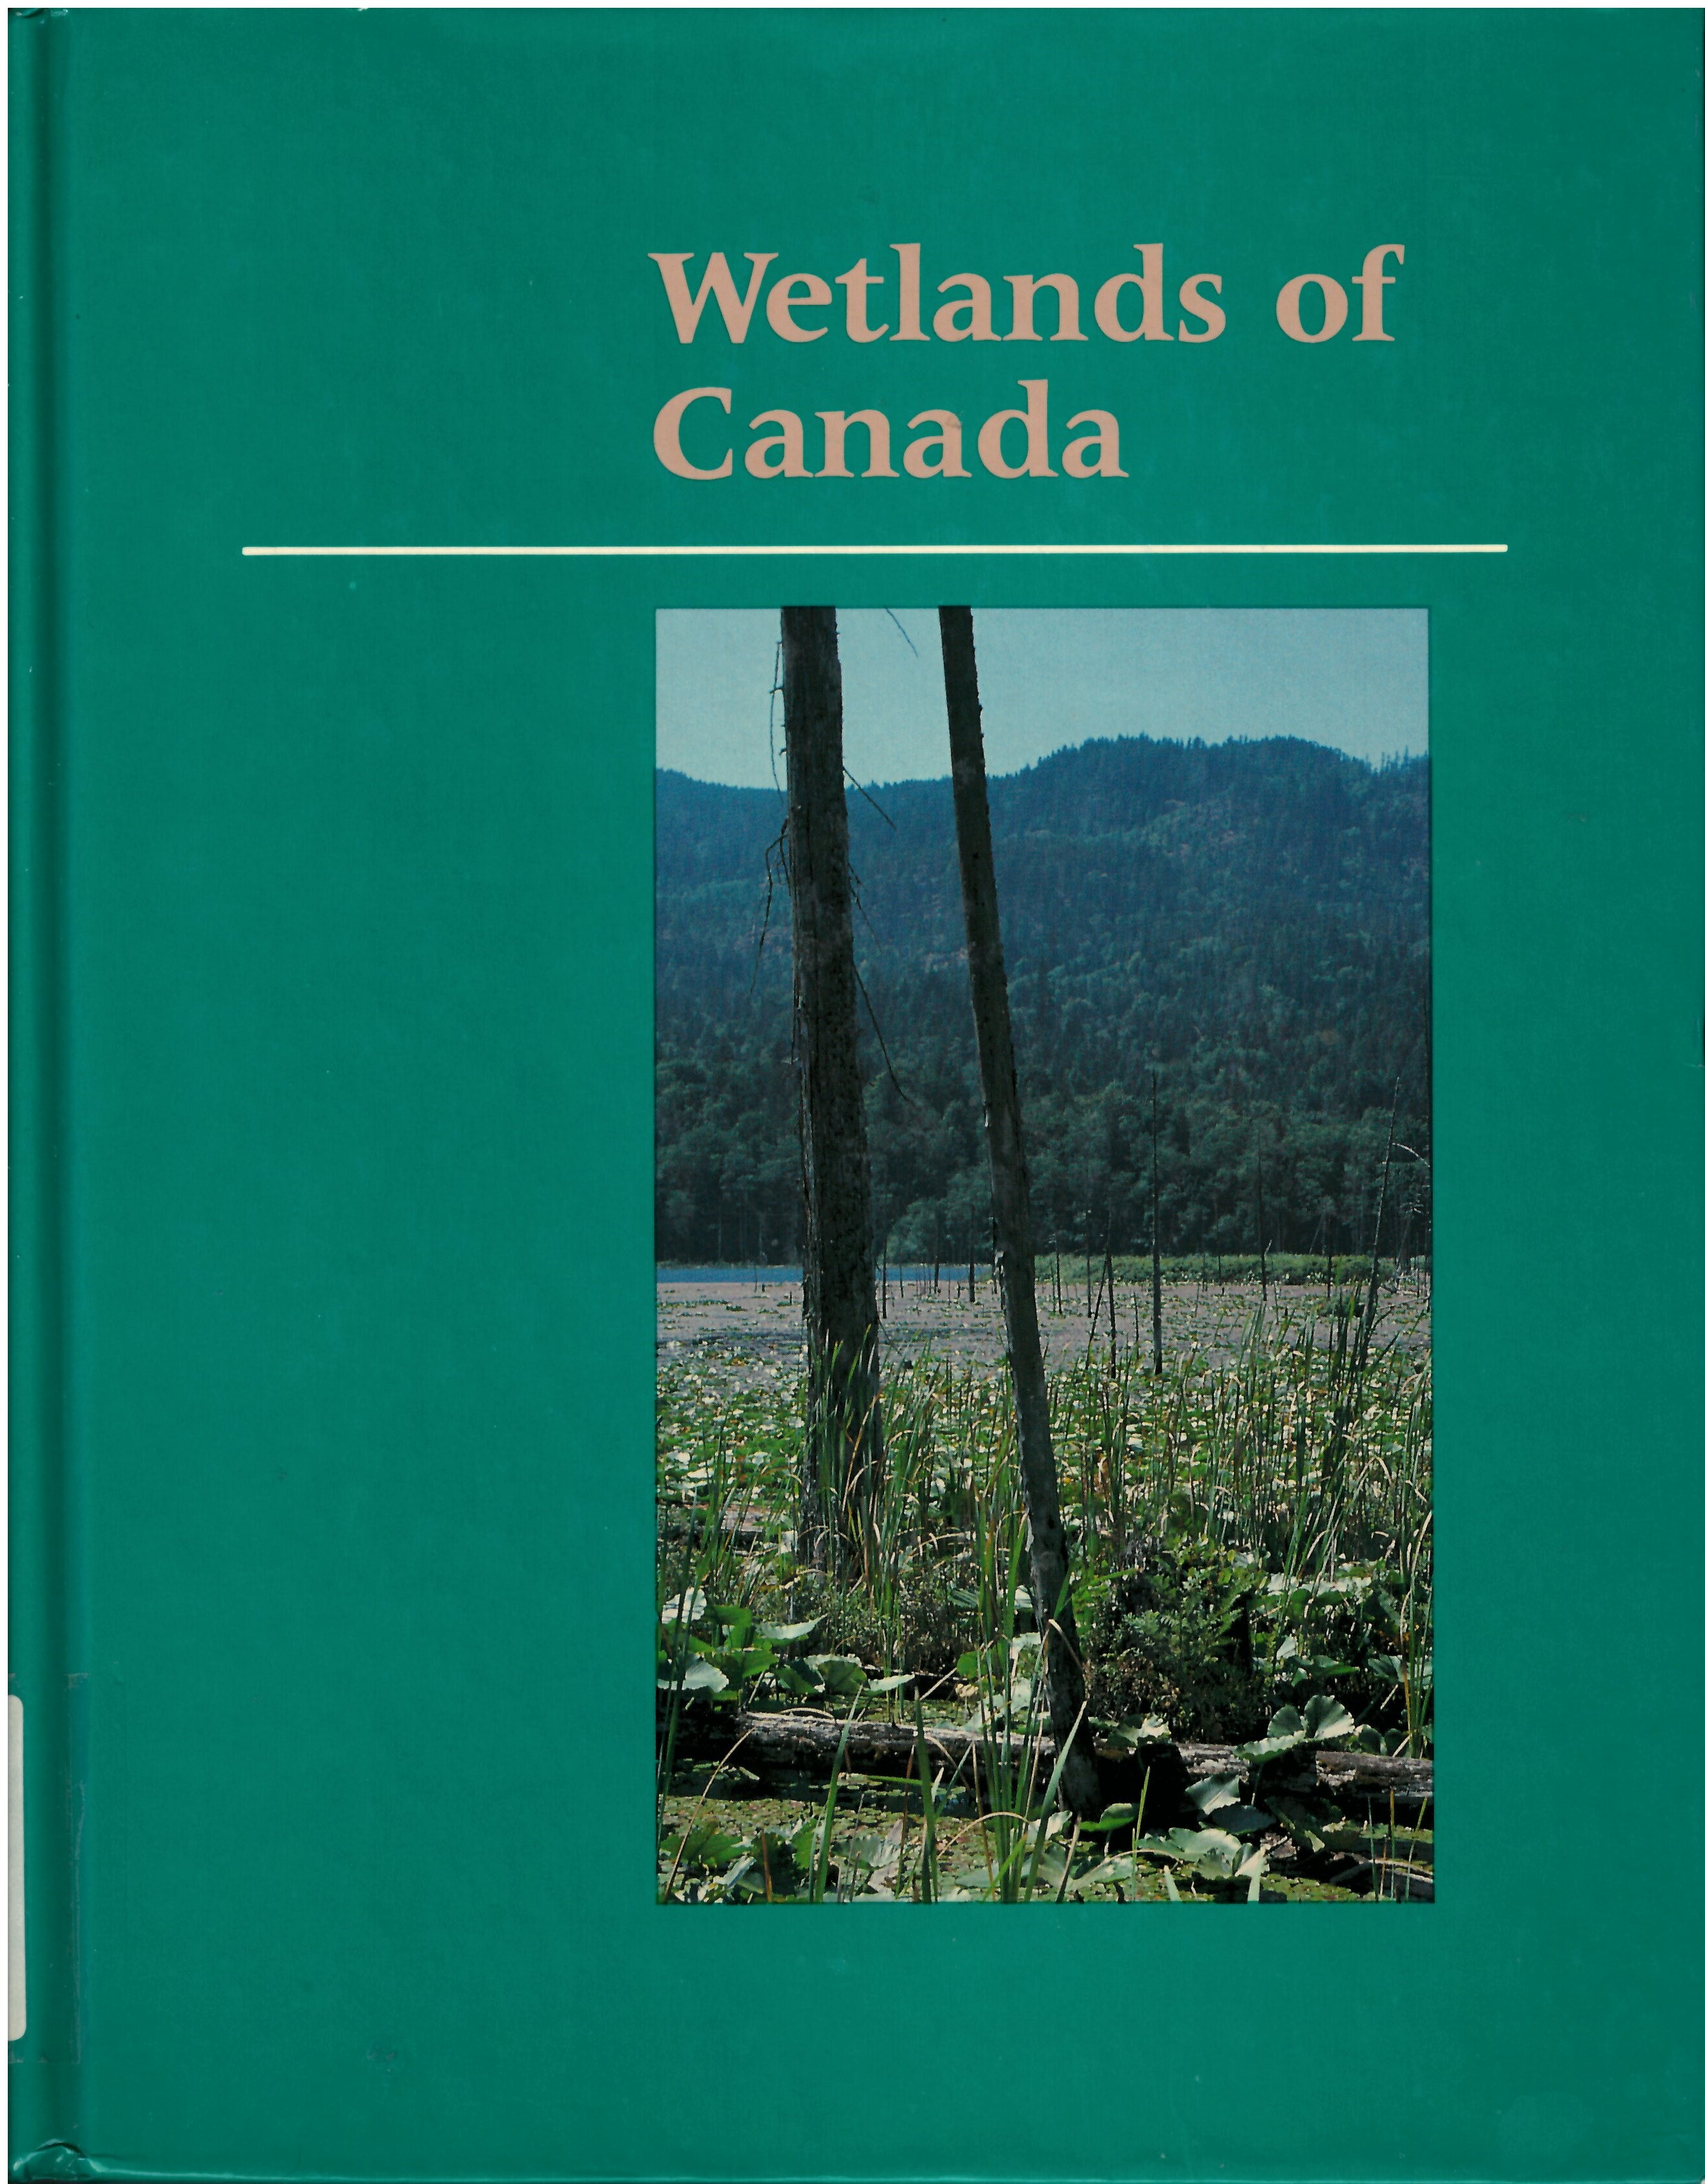 Wetlands of Canada